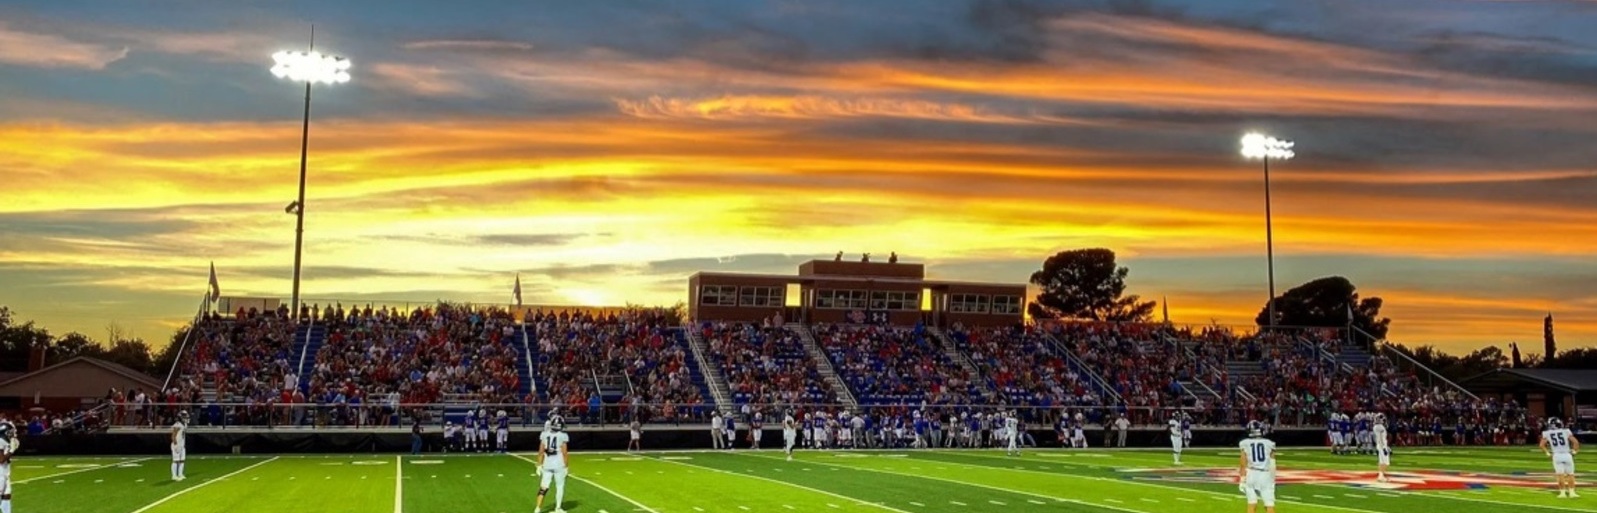 stadium sunset